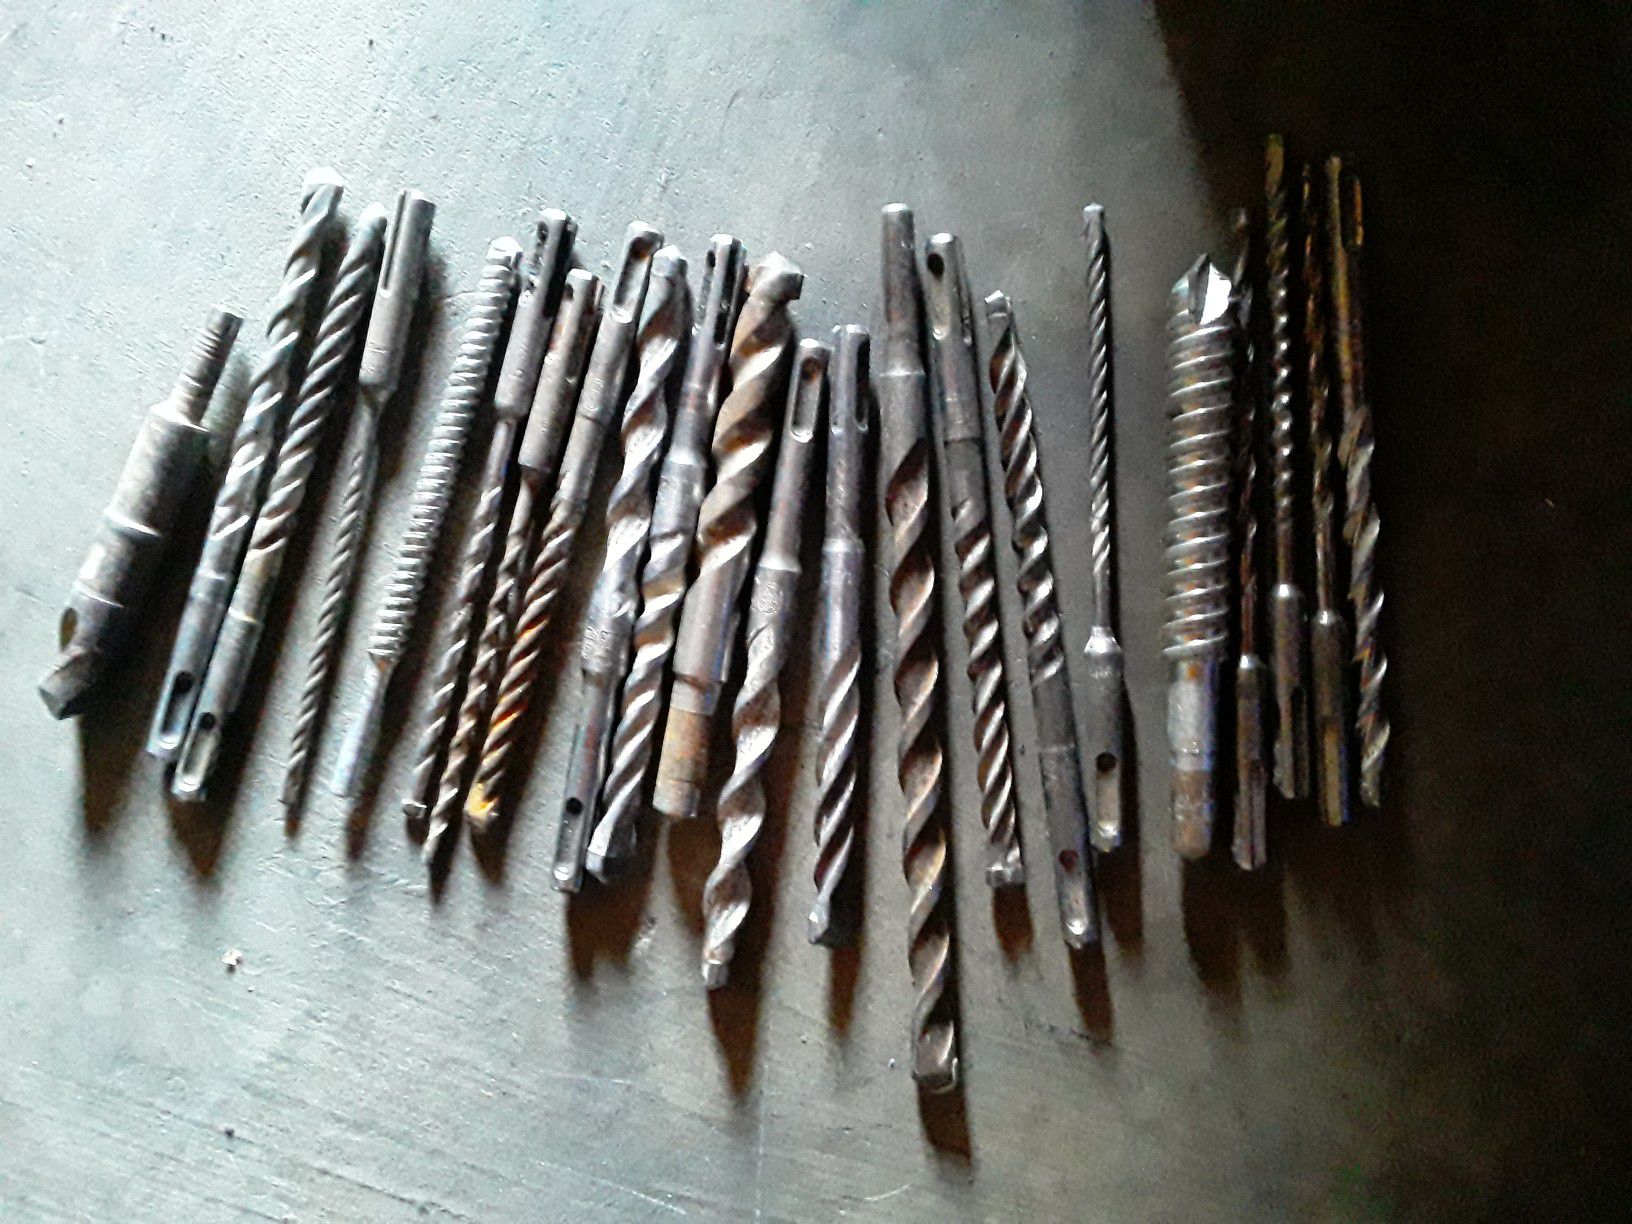 20 piece hilti Germany drill bits and USA made